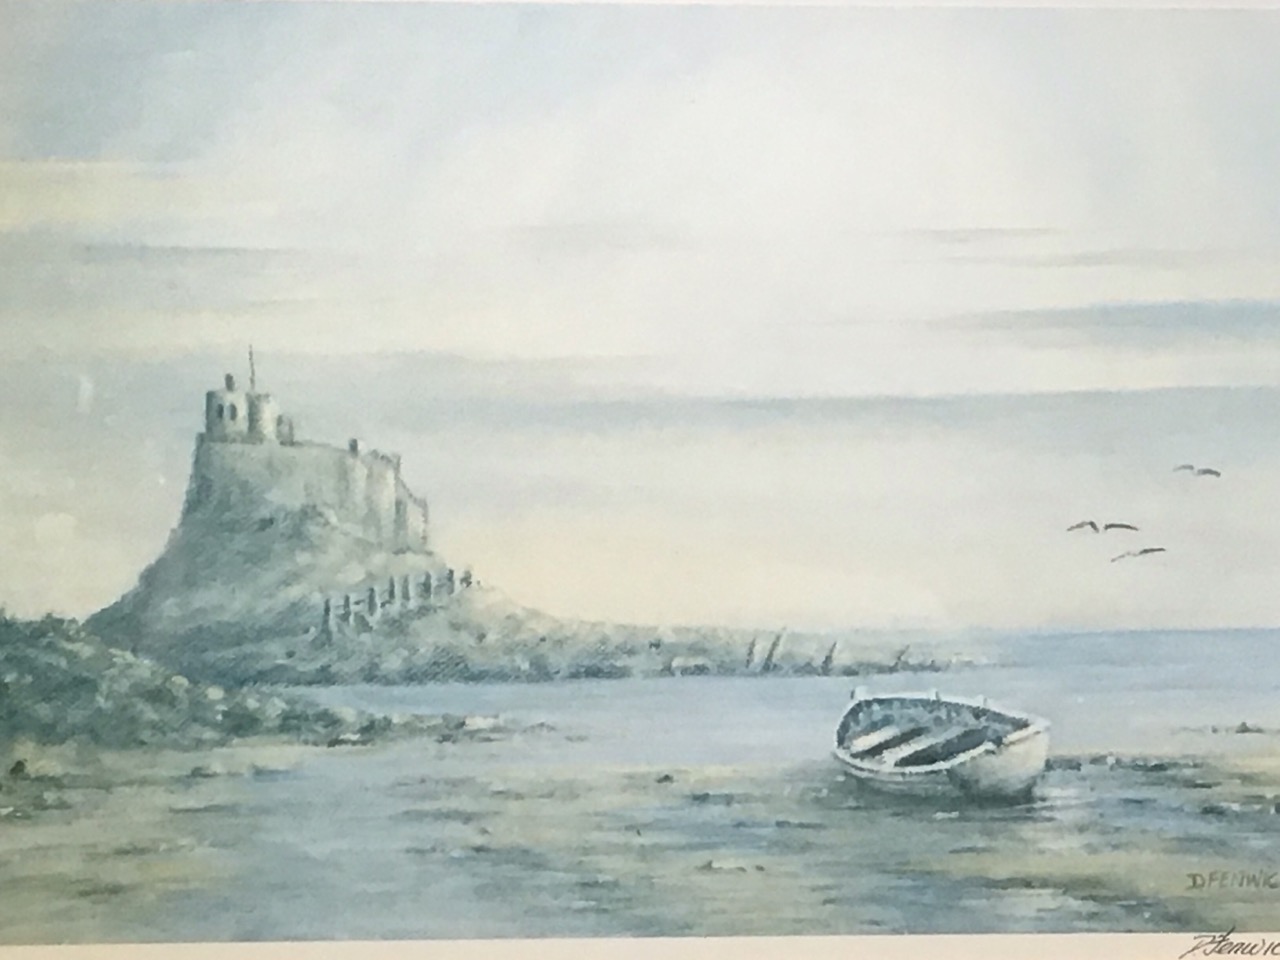 D Fenwick, a set of three coloured prints, Northumbrian coastal scenes - St Marys Island, Bamburgh - Image 3 of 3